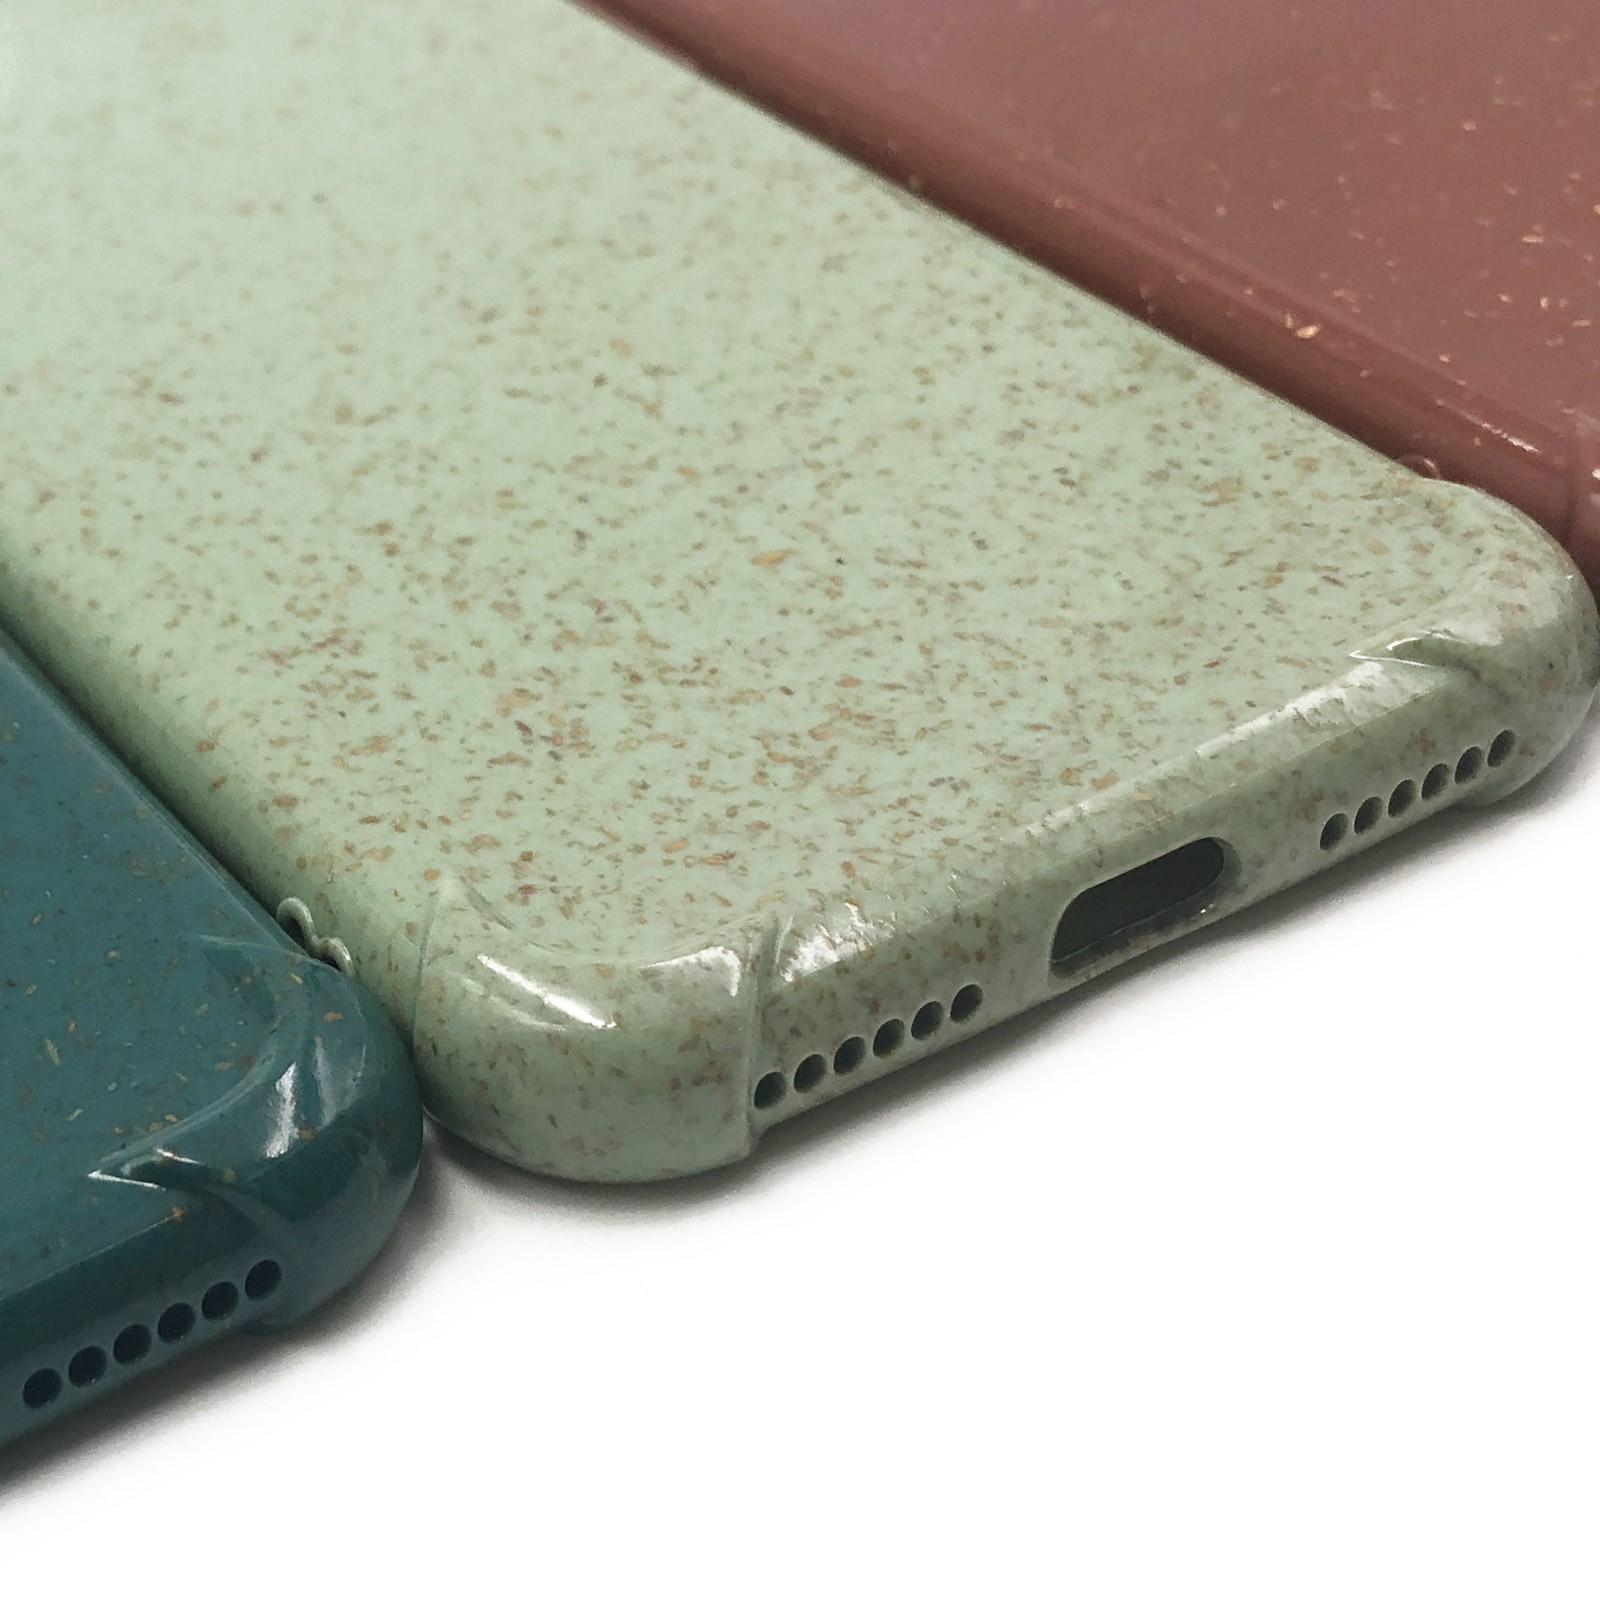 TenChen Tech transparent phone case manufacturer series for store